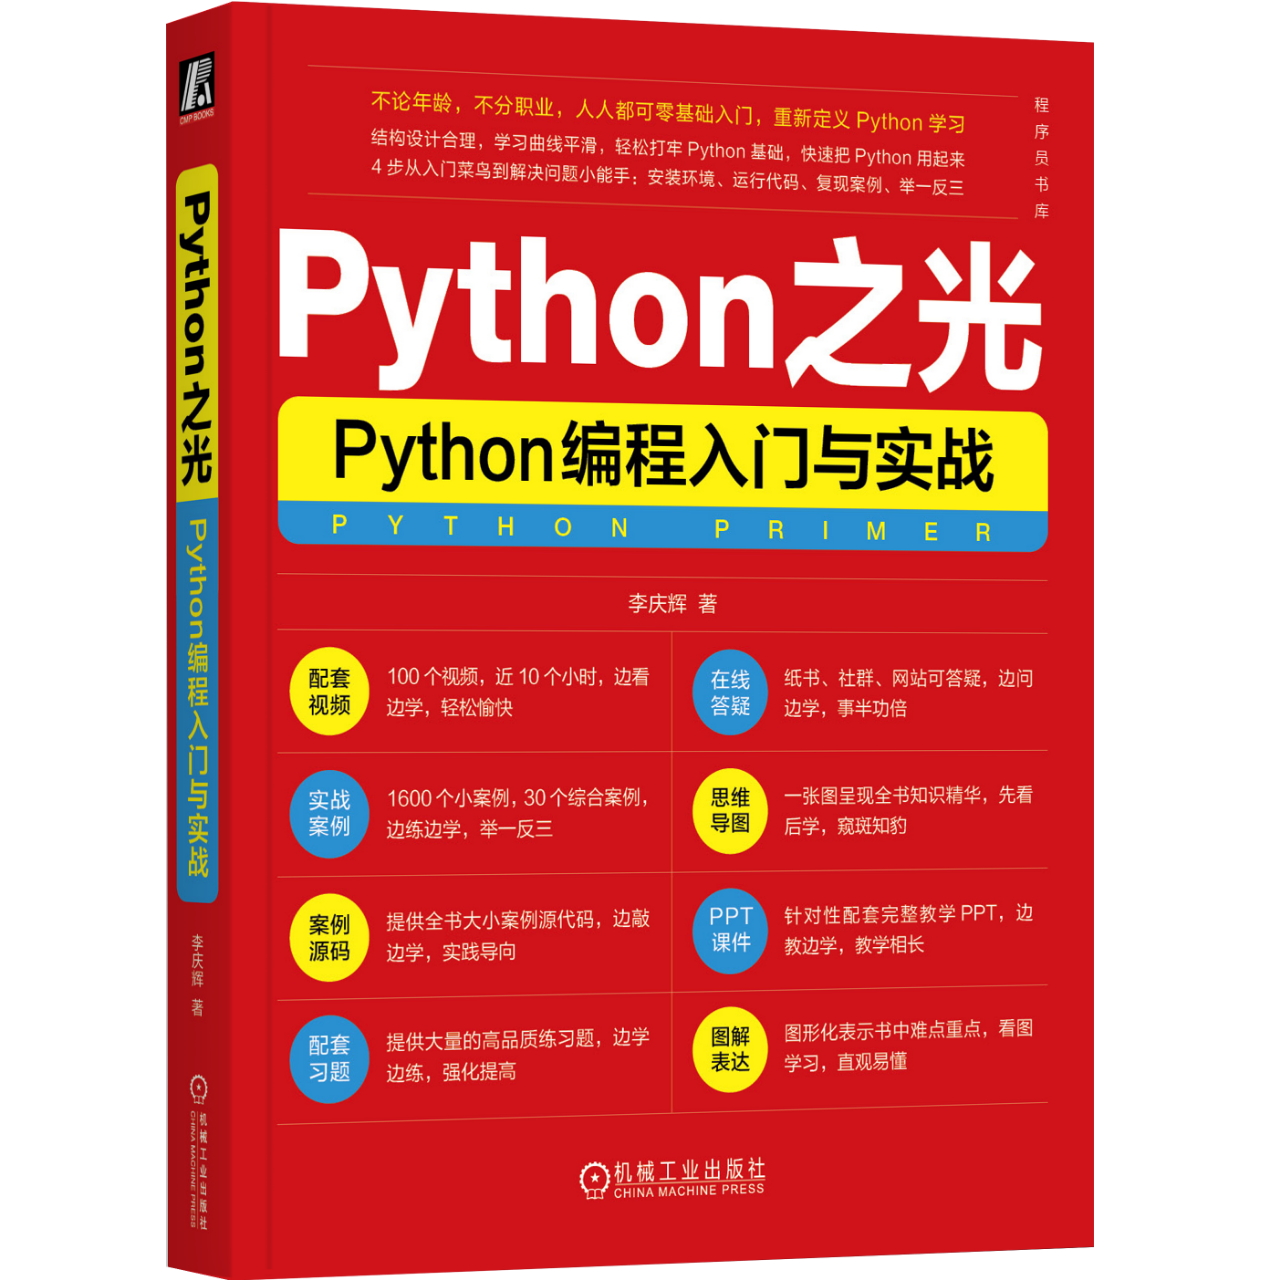 【Python爬虫教程】40分钟上手Python爬虫/零基础入门到精通教学（第三期）_哔哩哔哩_bilibili